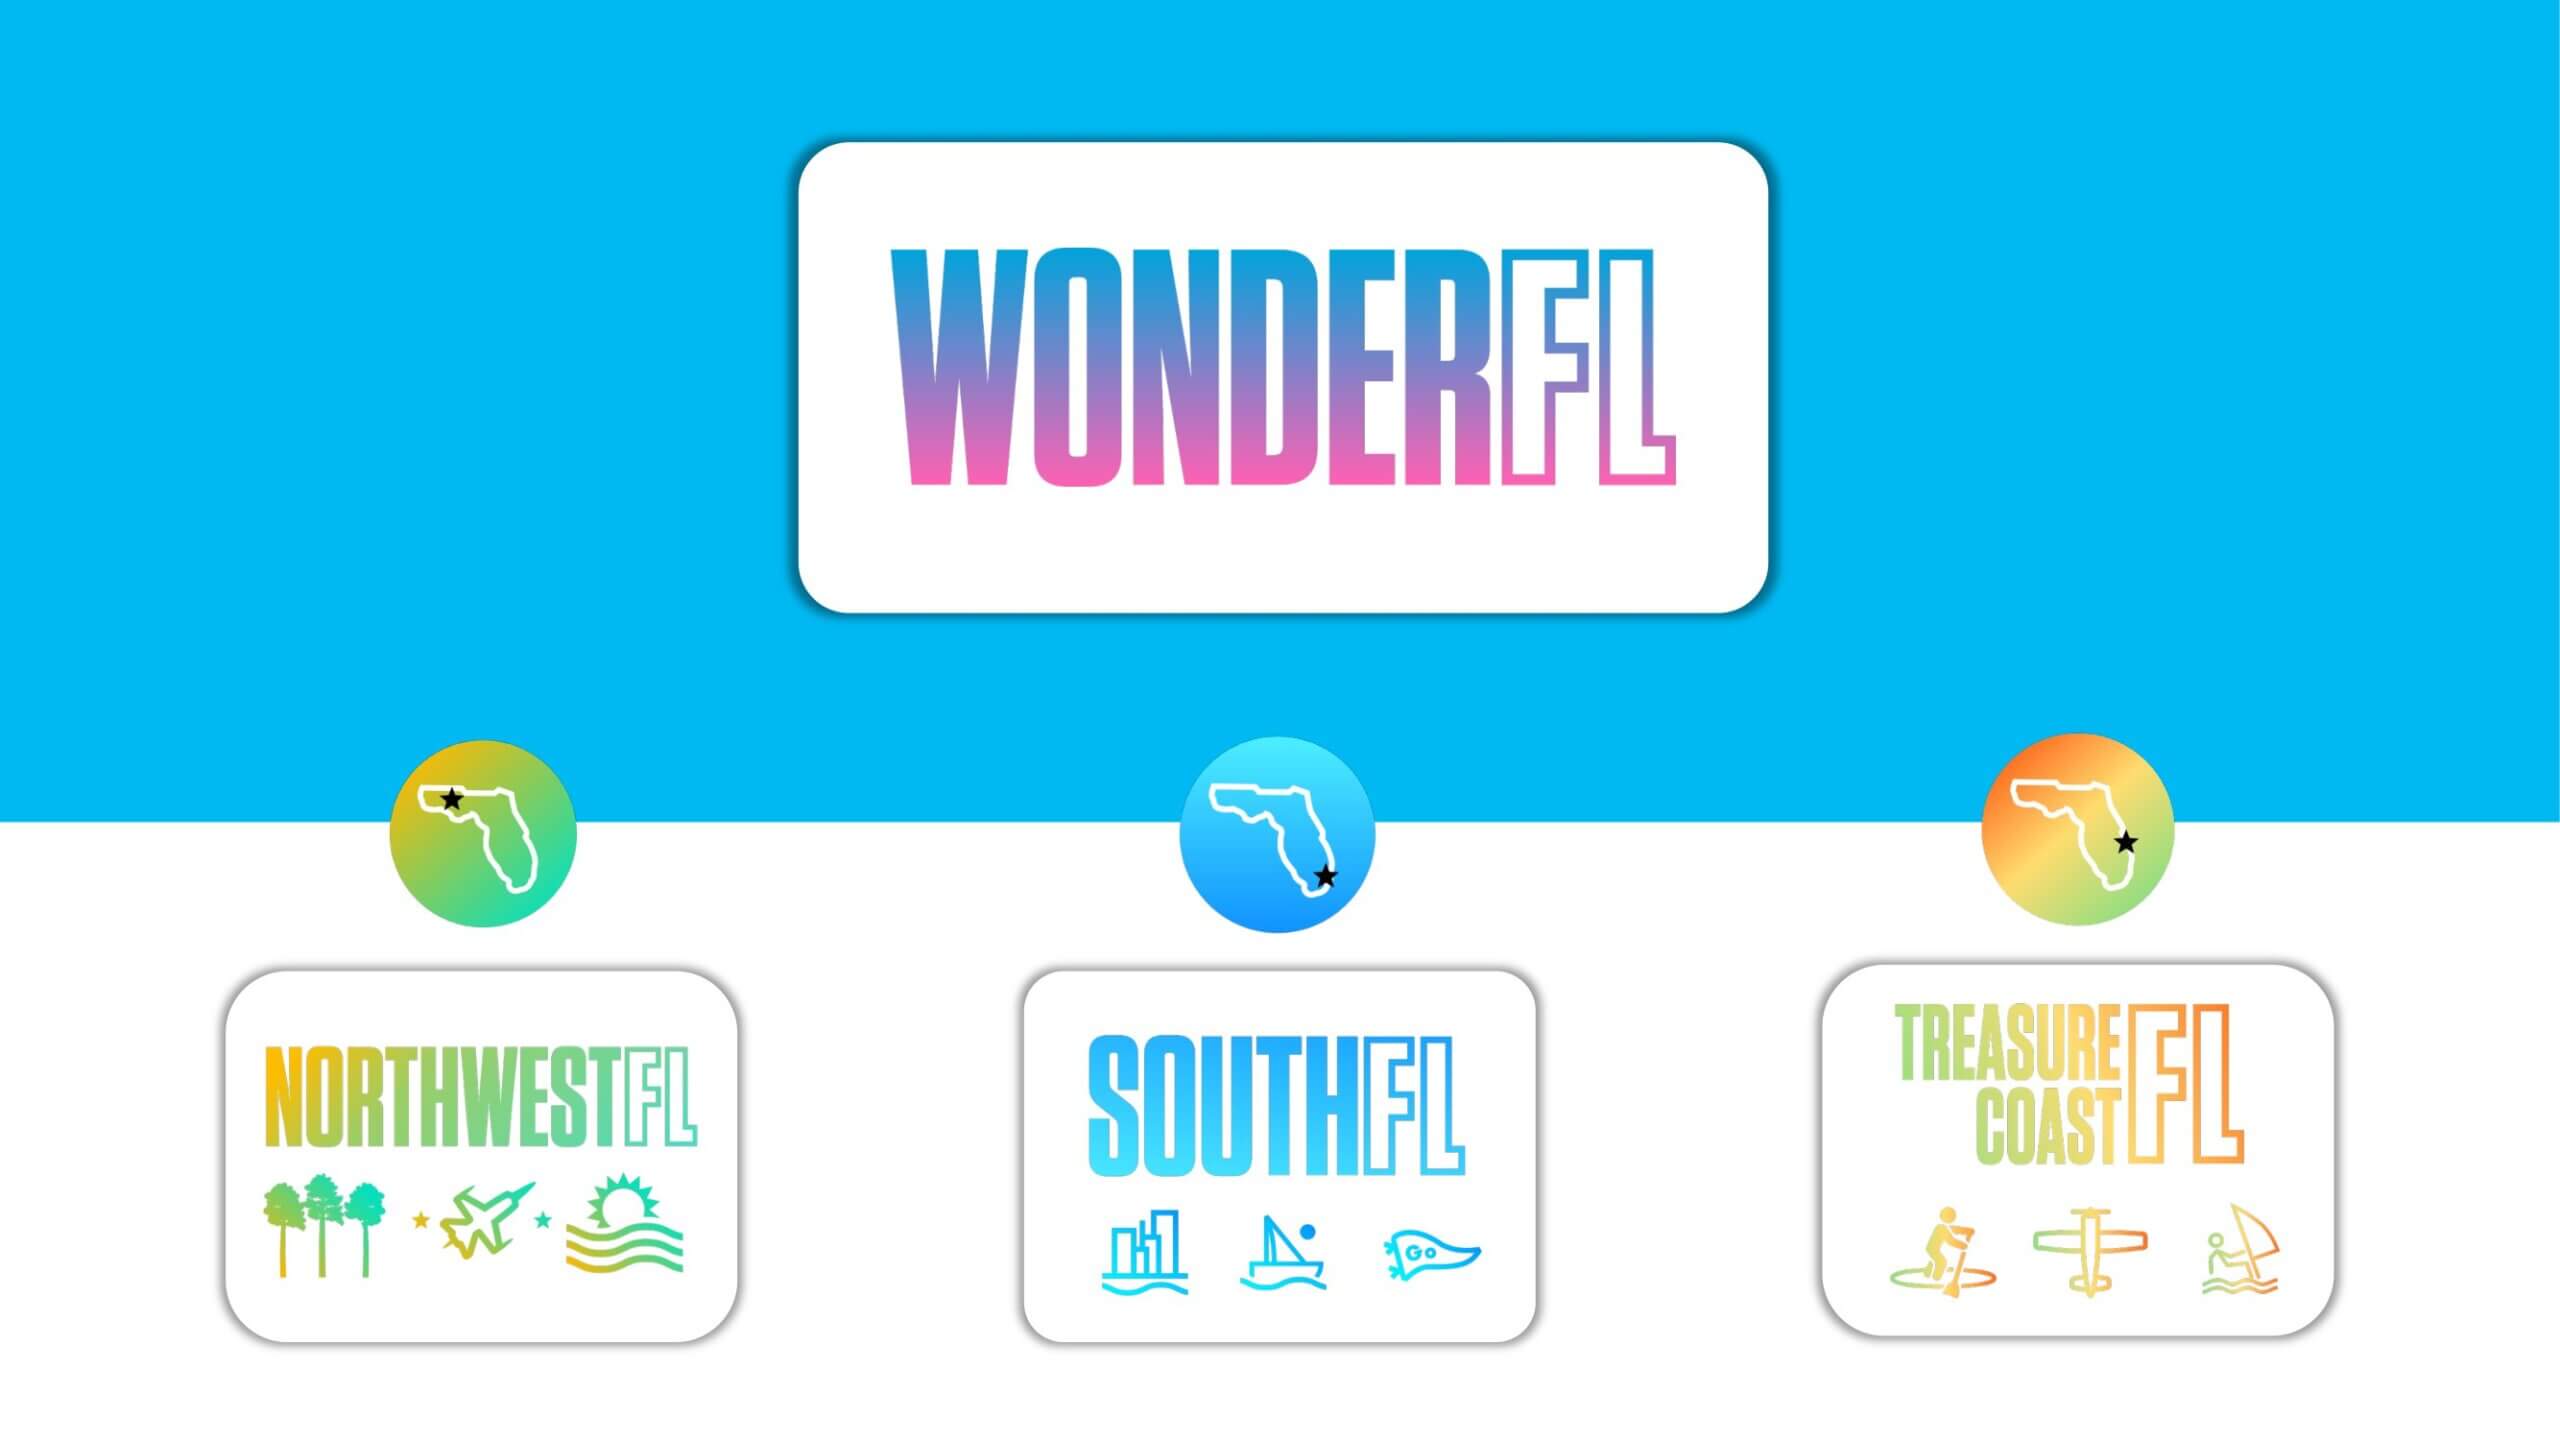 WonderFL logo and three regional campaign logos for NorthwestFL, SouthFL and Treasure CoastFL